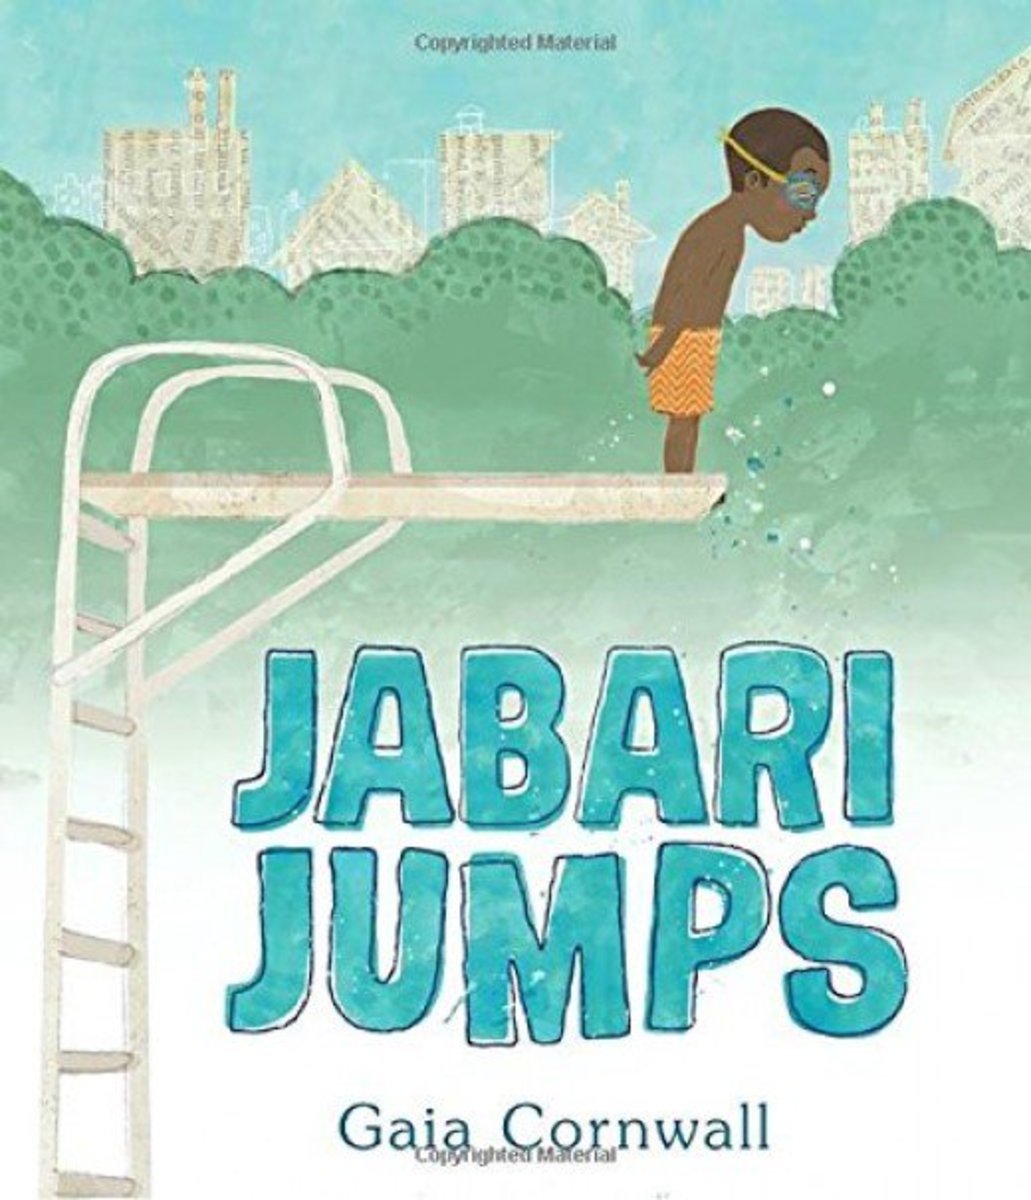 Jabari Jumps by Gaia Cornwall